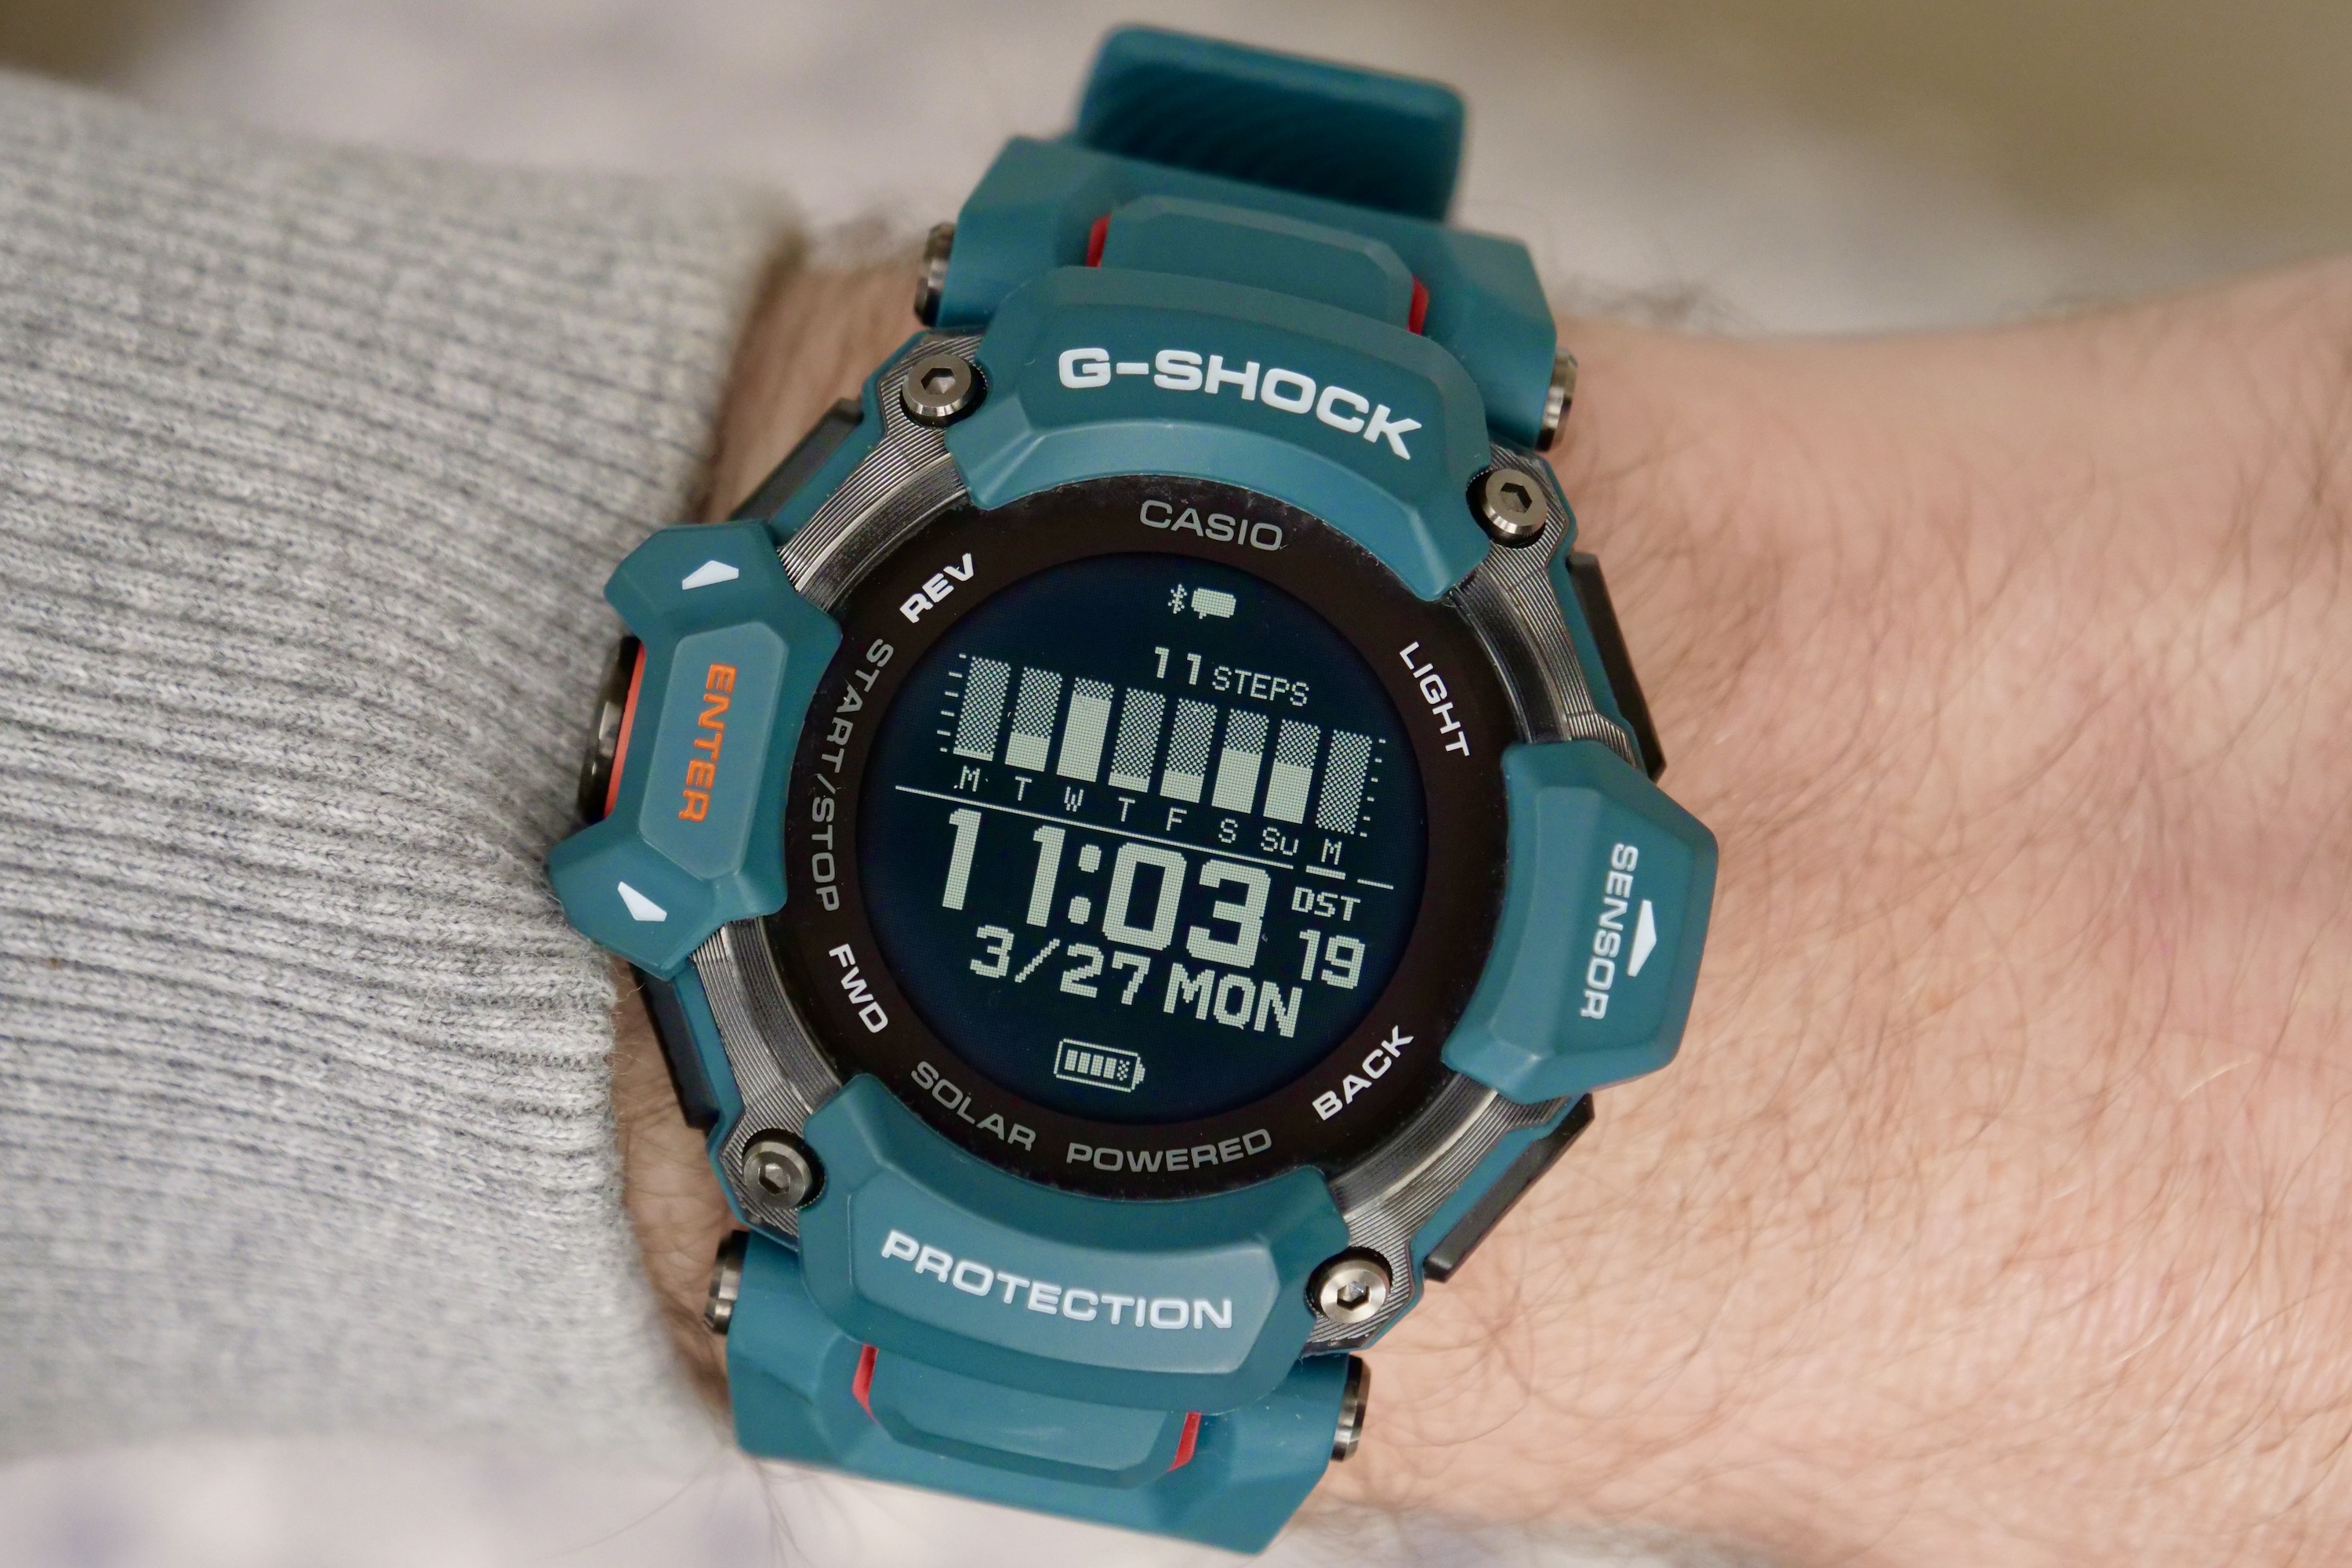 G-Shock GBD-H2000 review: the everlasting hybrid smartwatch